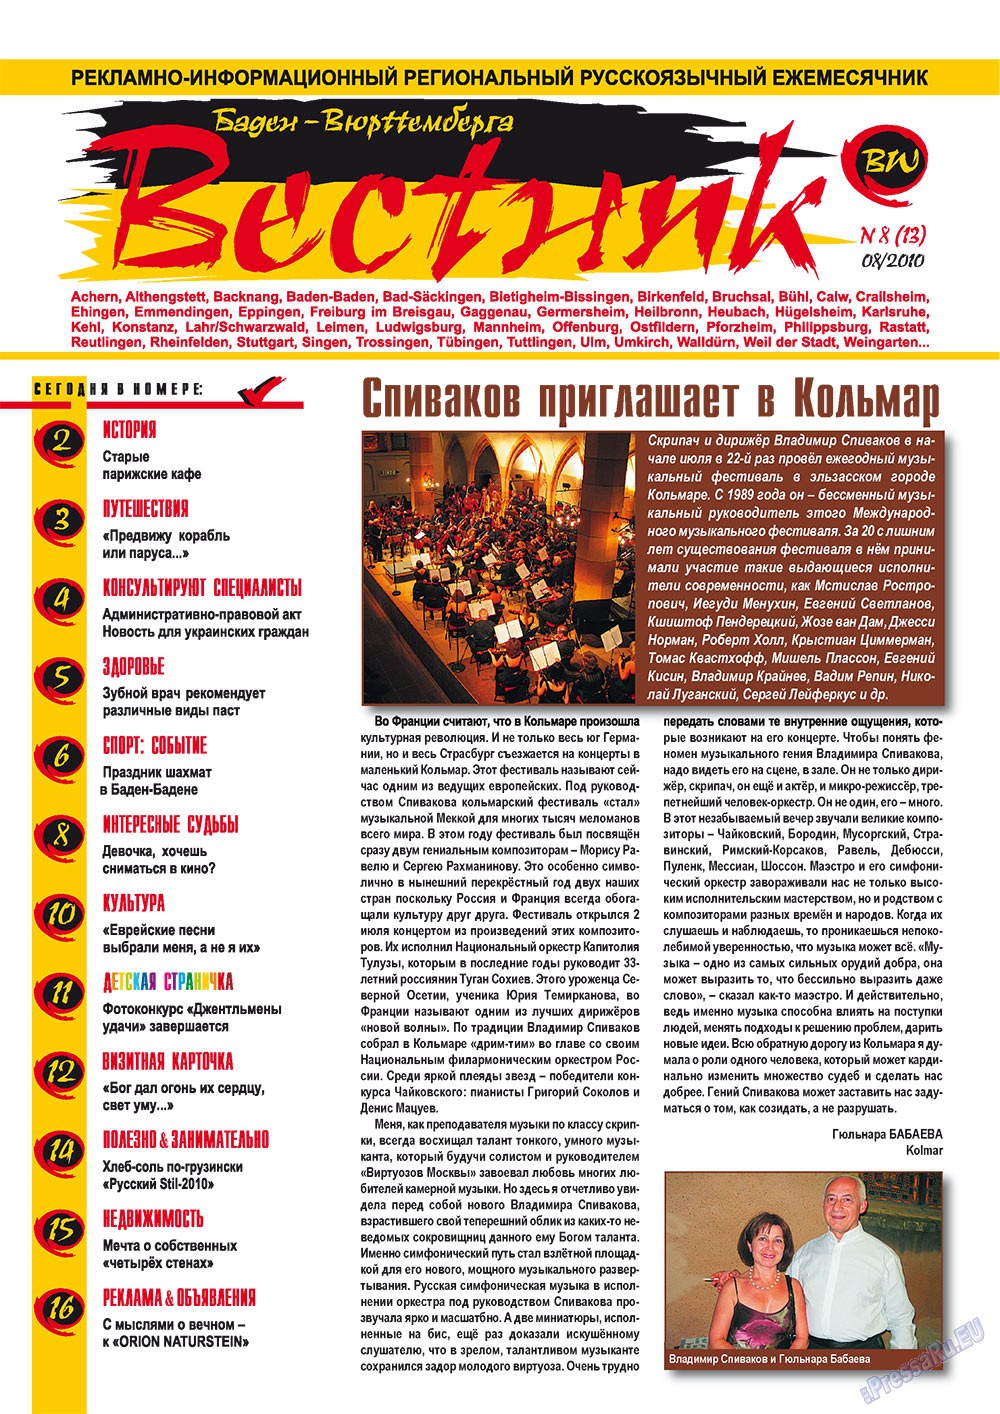 Вестник-info (журнал). 2010 год, номер 8, стр. 1